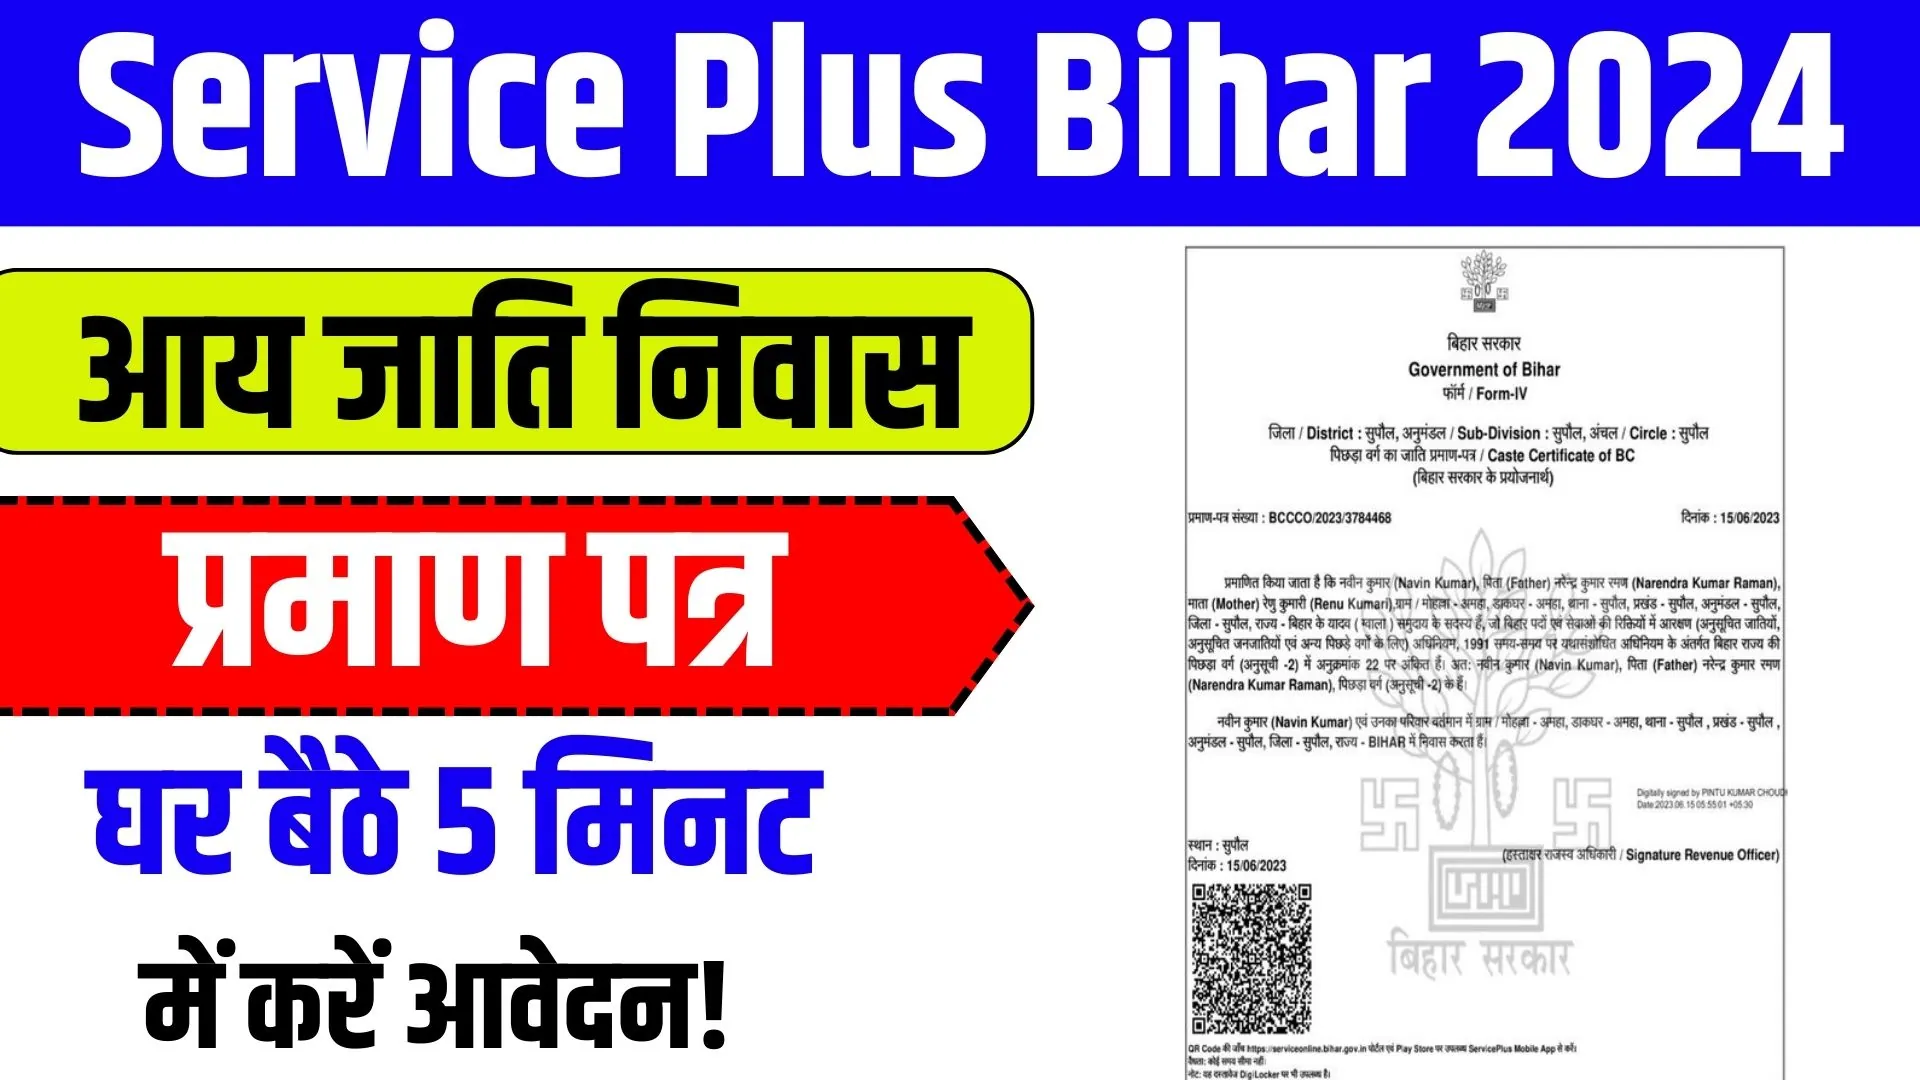 Service Plus Bihar 2024